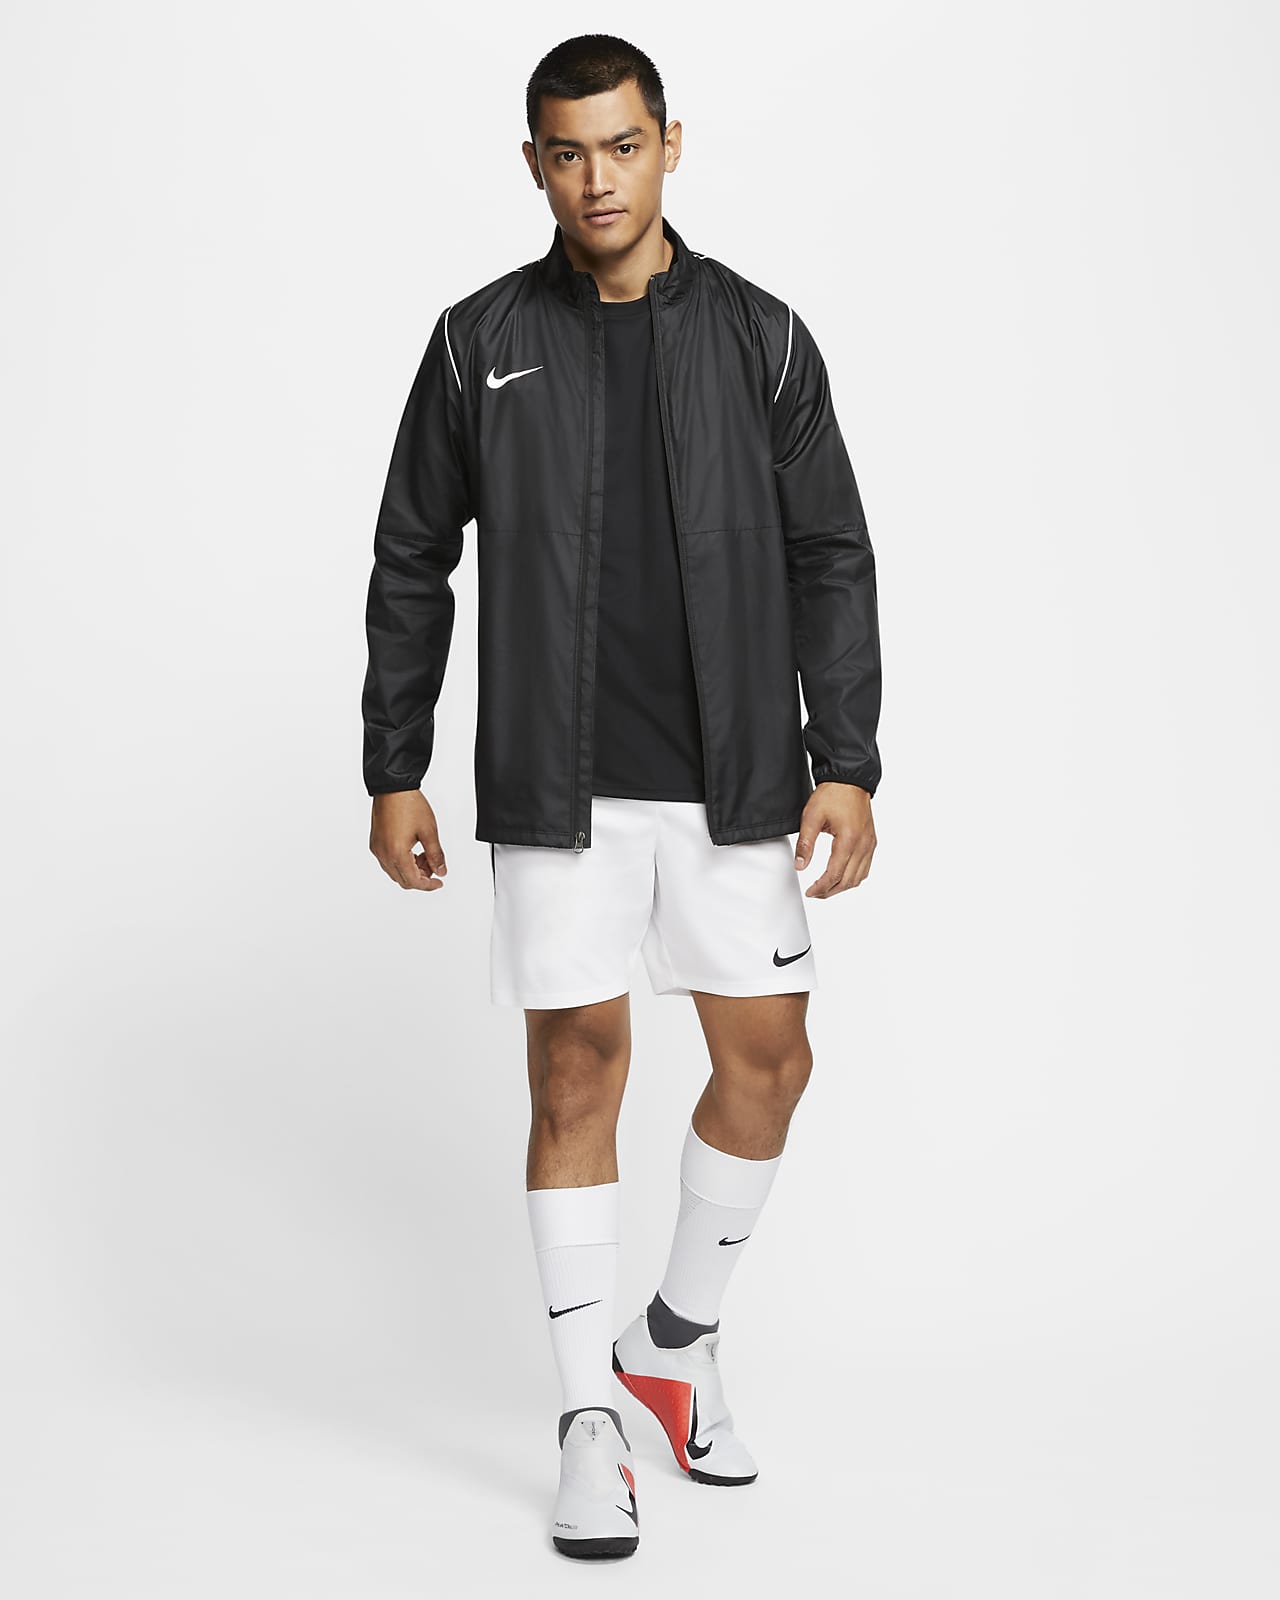 Nike Repel Men's Woven Soccer Jacket 